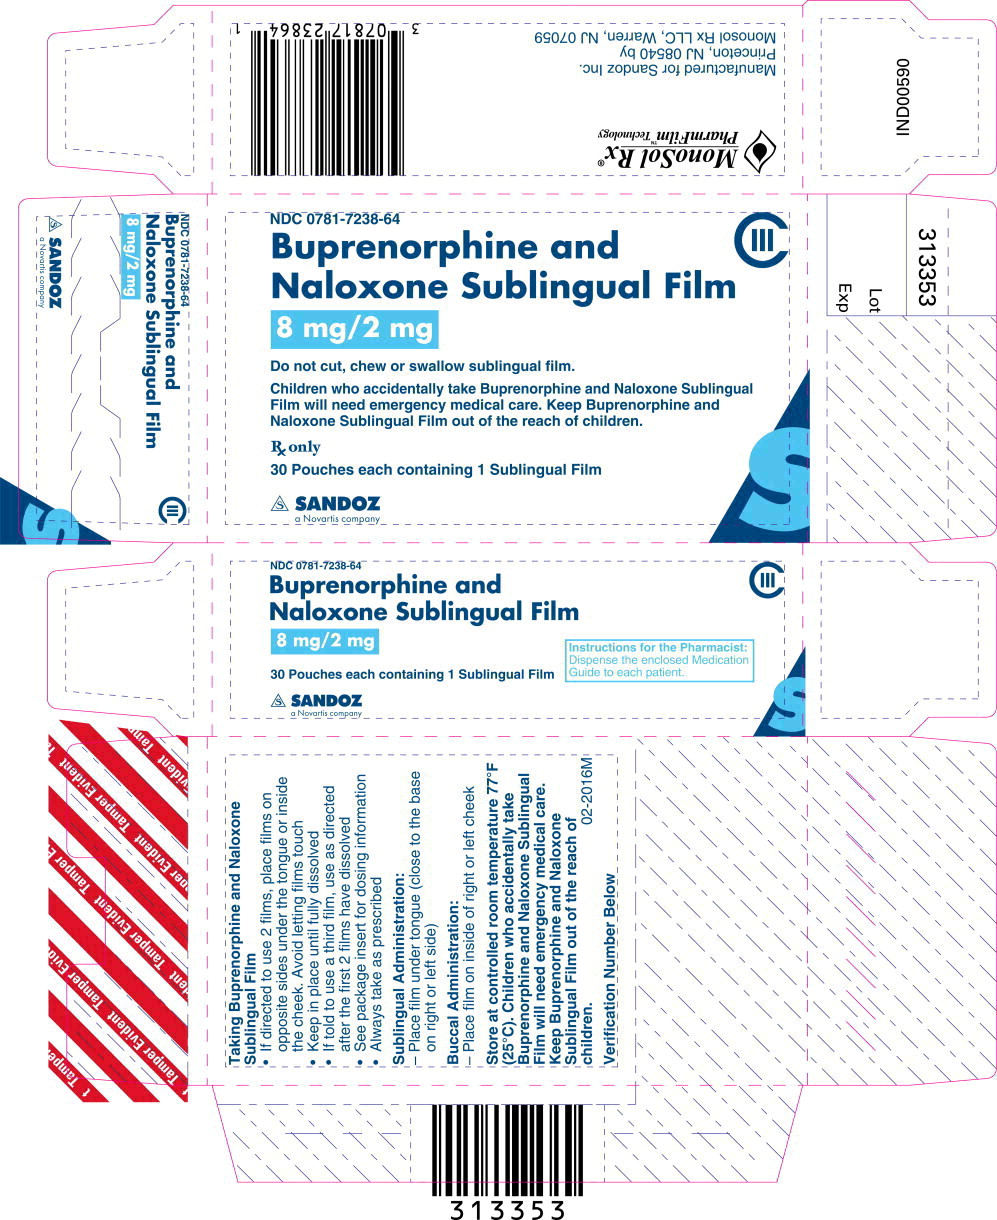 Principal Display Panel - Buprenorphine and Naloxone Sublingual Film 8 mg/2 mg Carton Label
